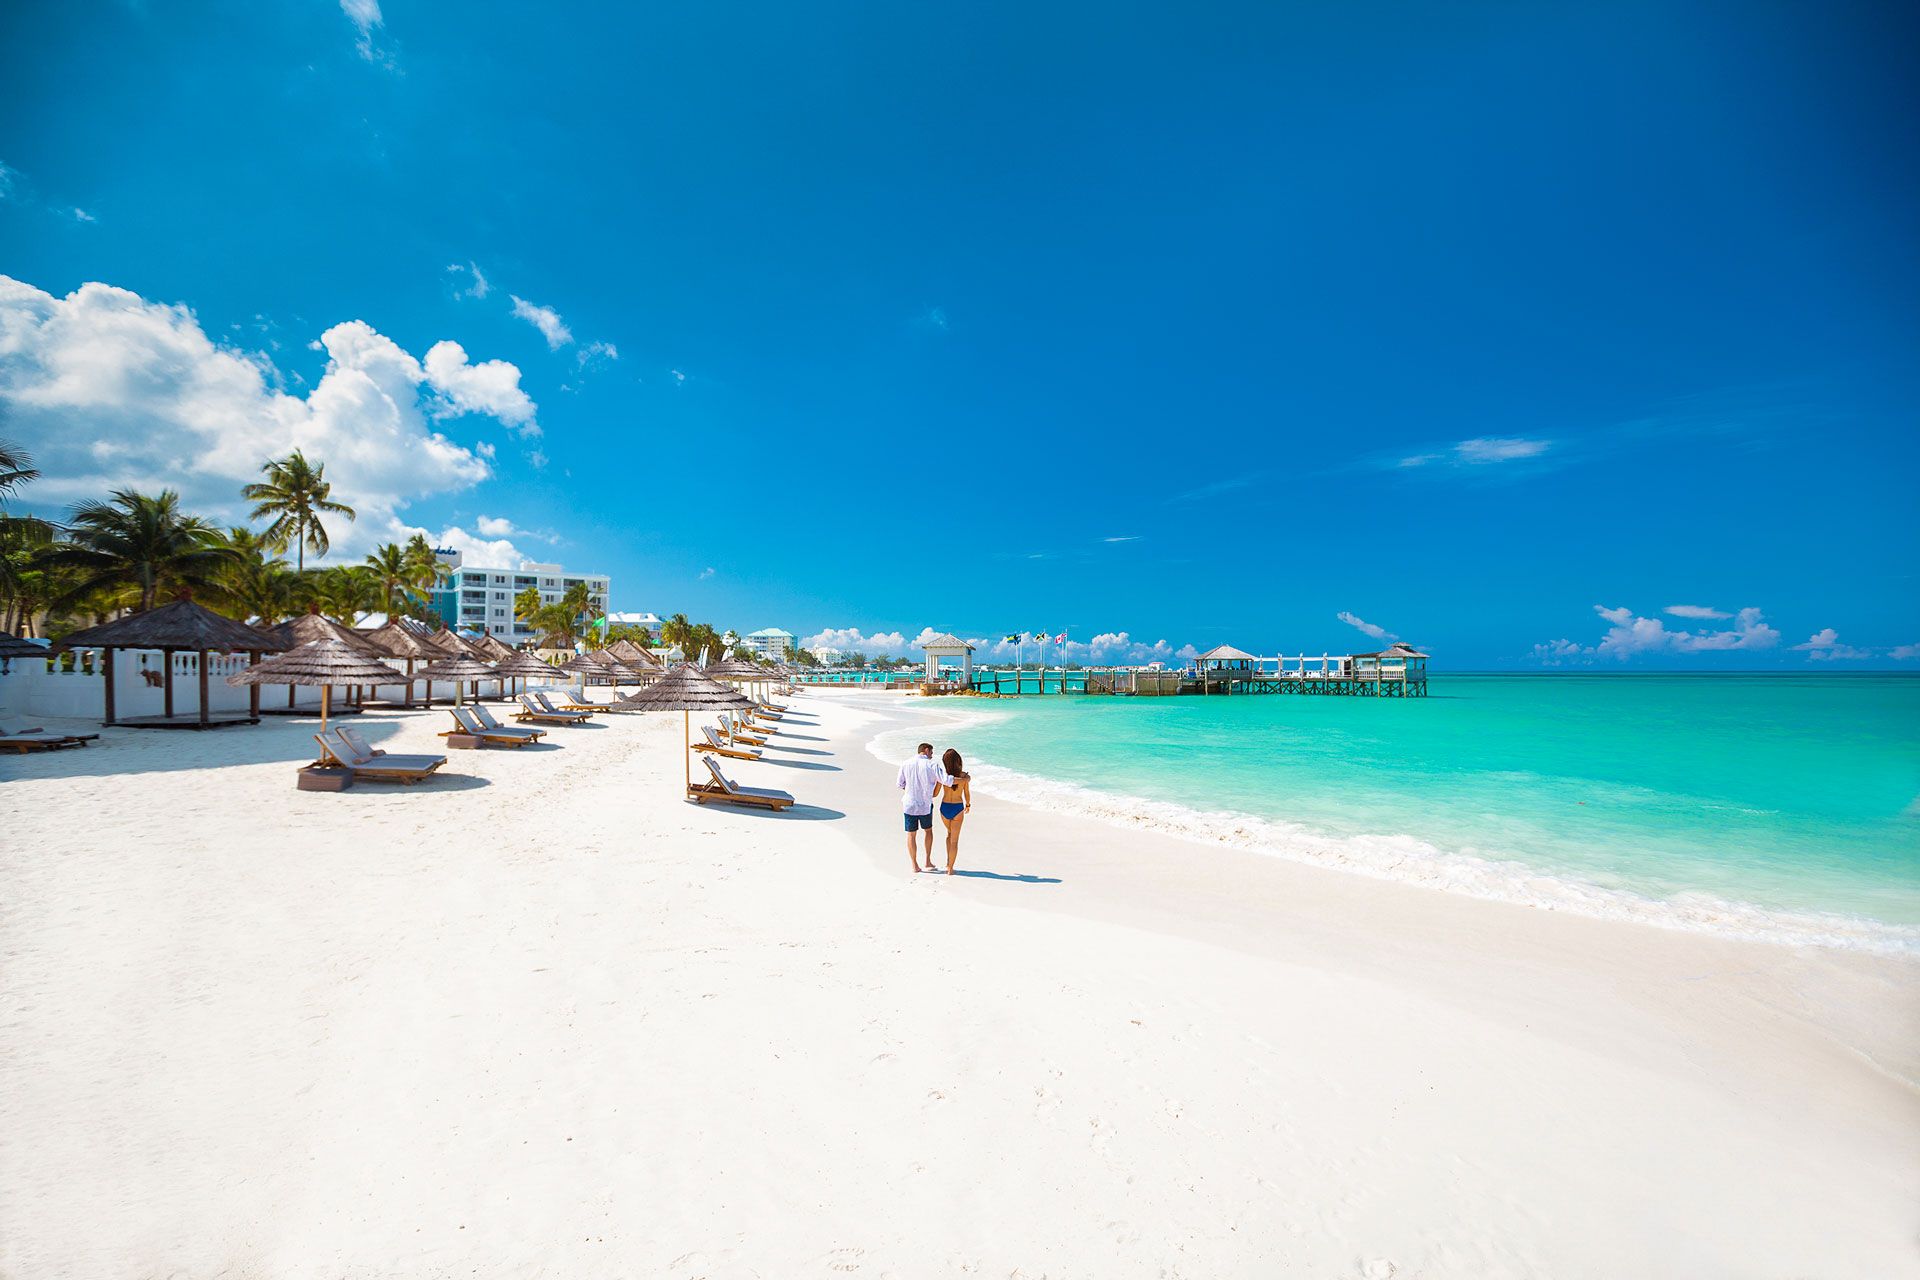 Sandals Royal Bahamian Cable Beach